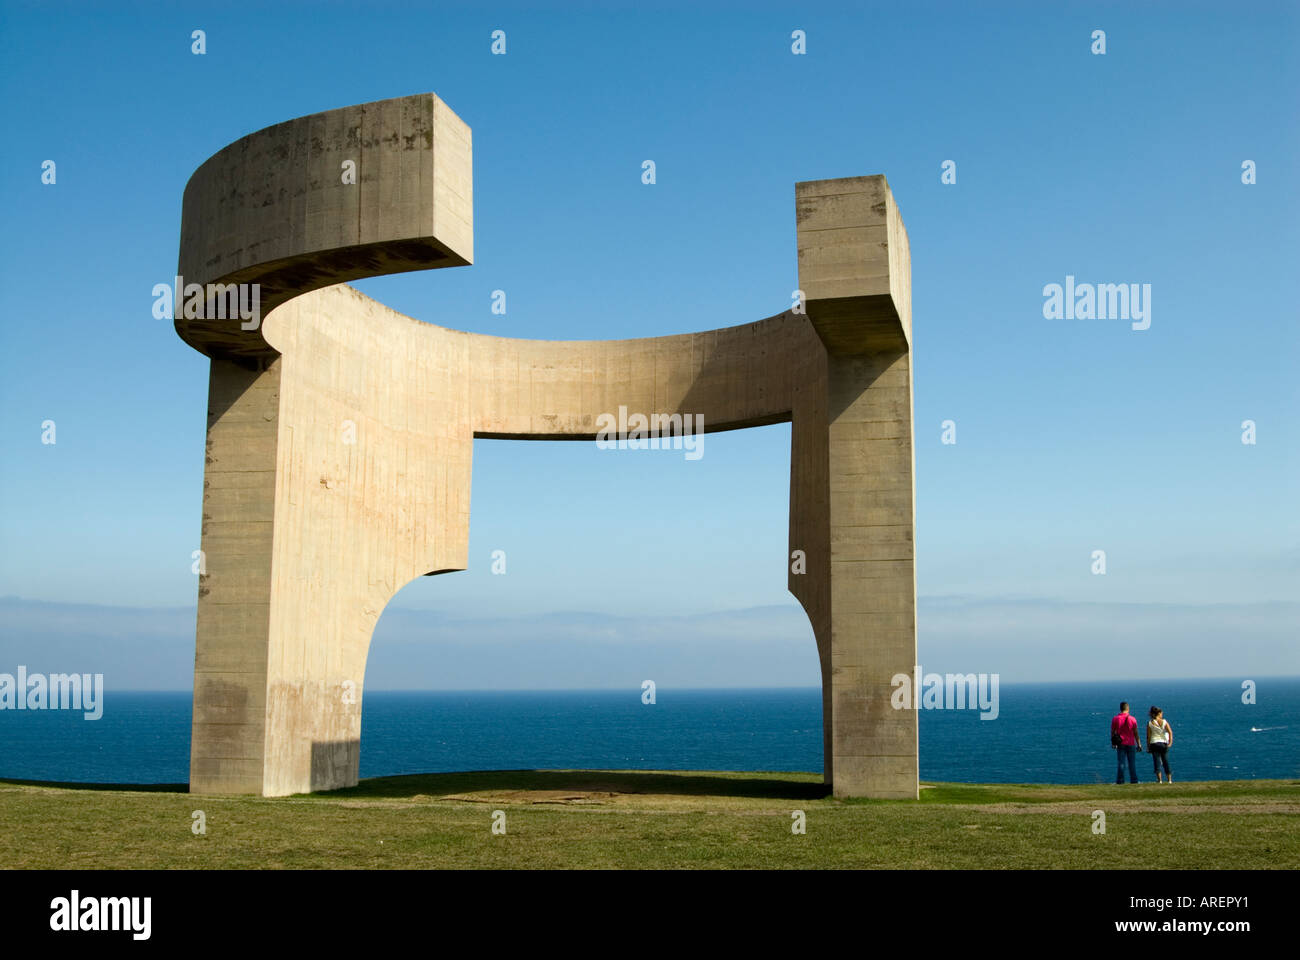 La sculpture moderne Elogio del Horizonte par Eduardo Chillida sur le Cerro de Santa Catalina, Gijon, Asturias, Espagne Banque D'Images